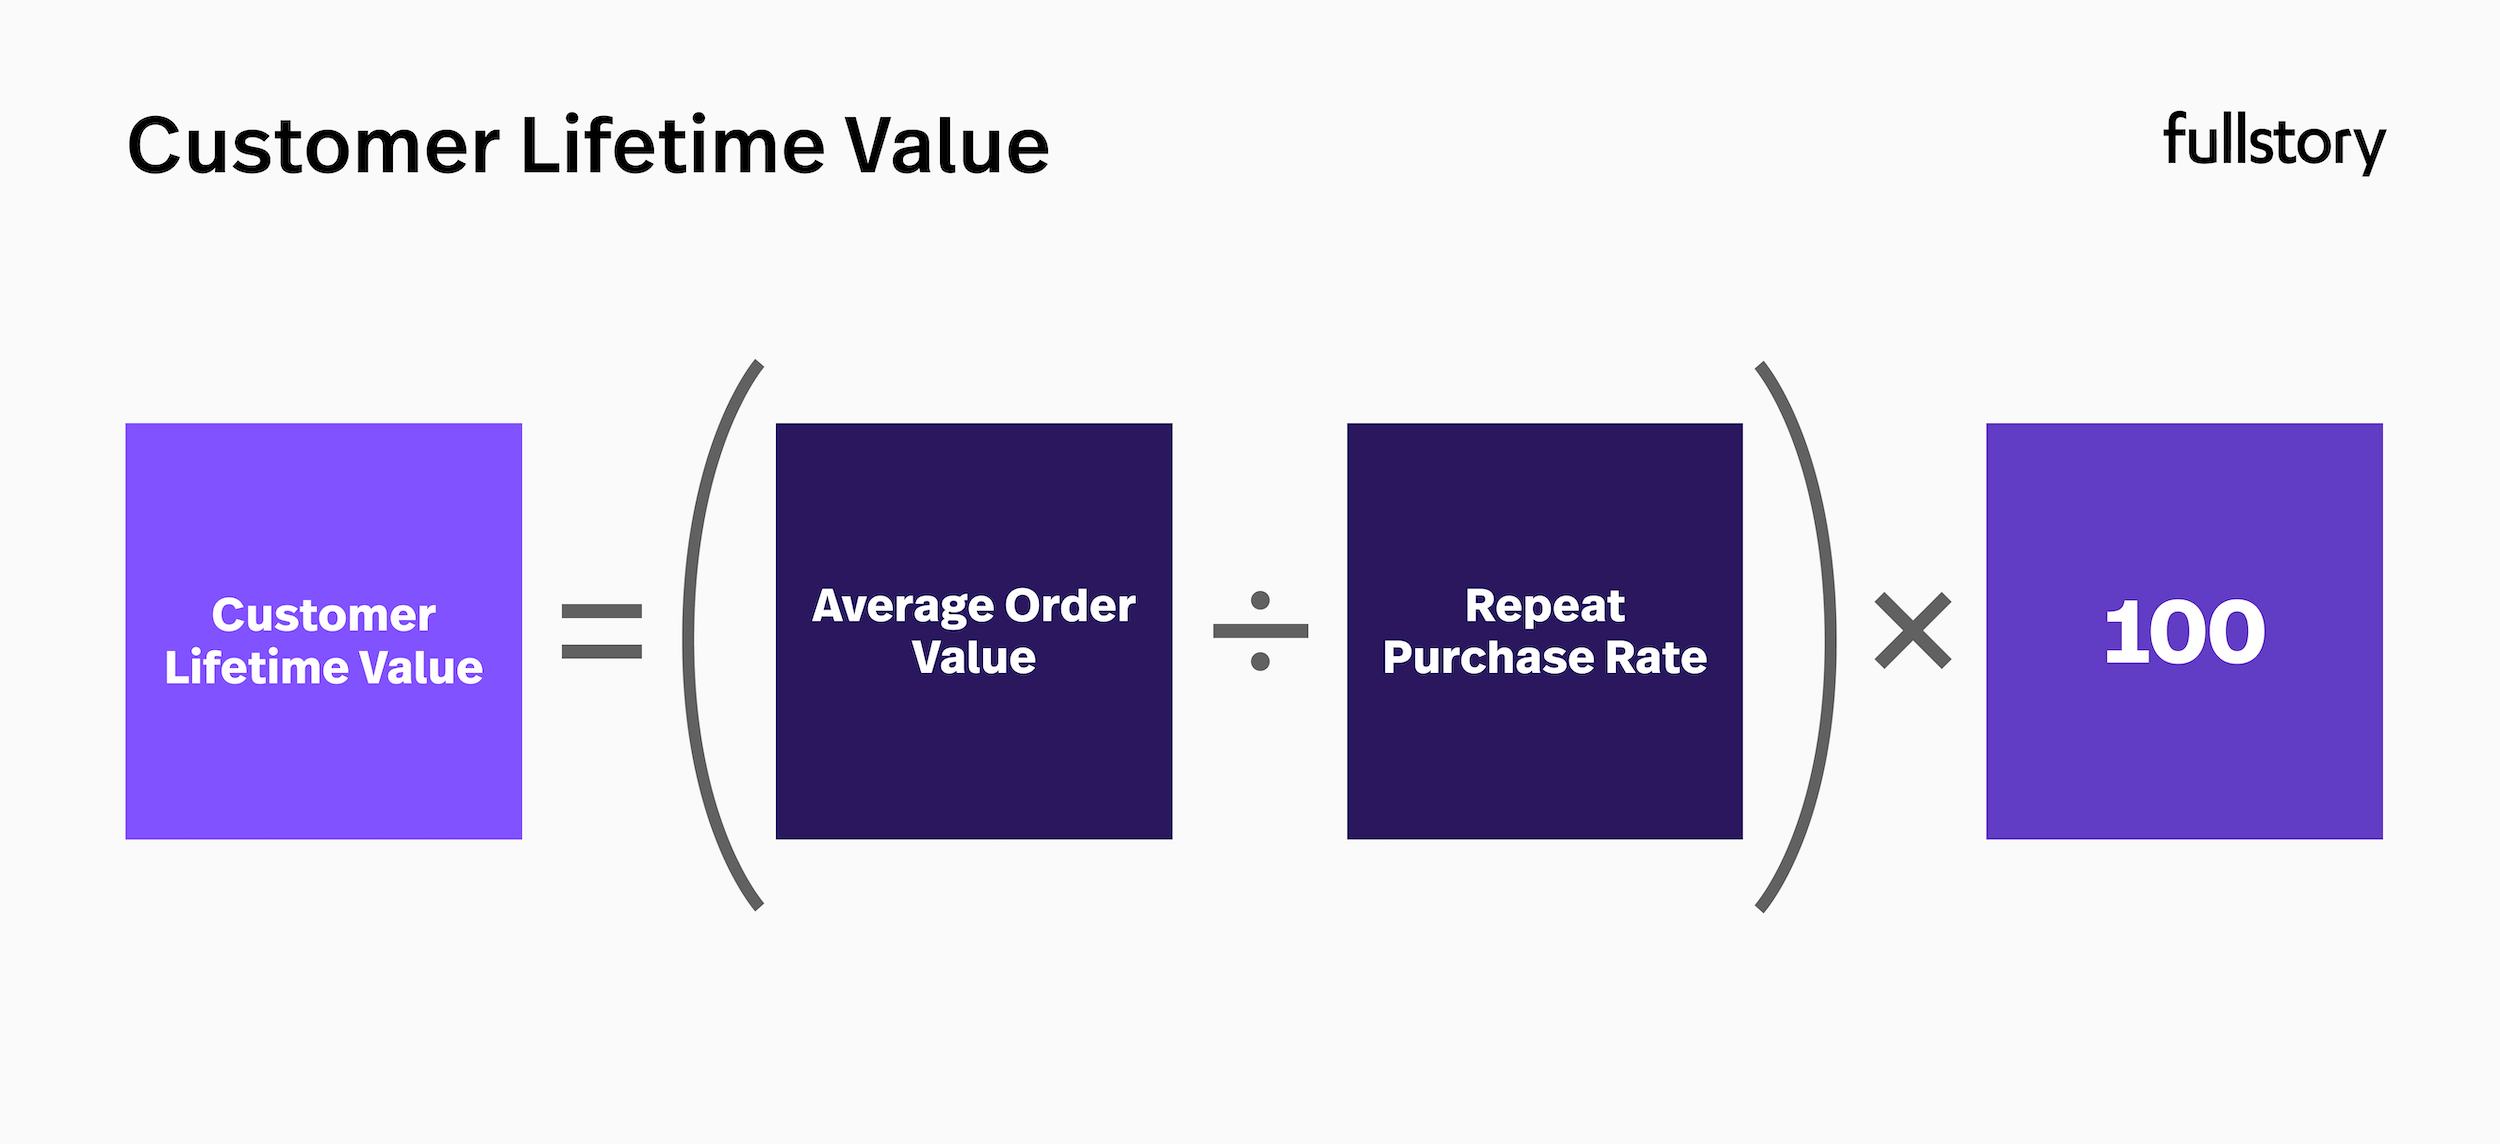 Customer Lifetime Value formula